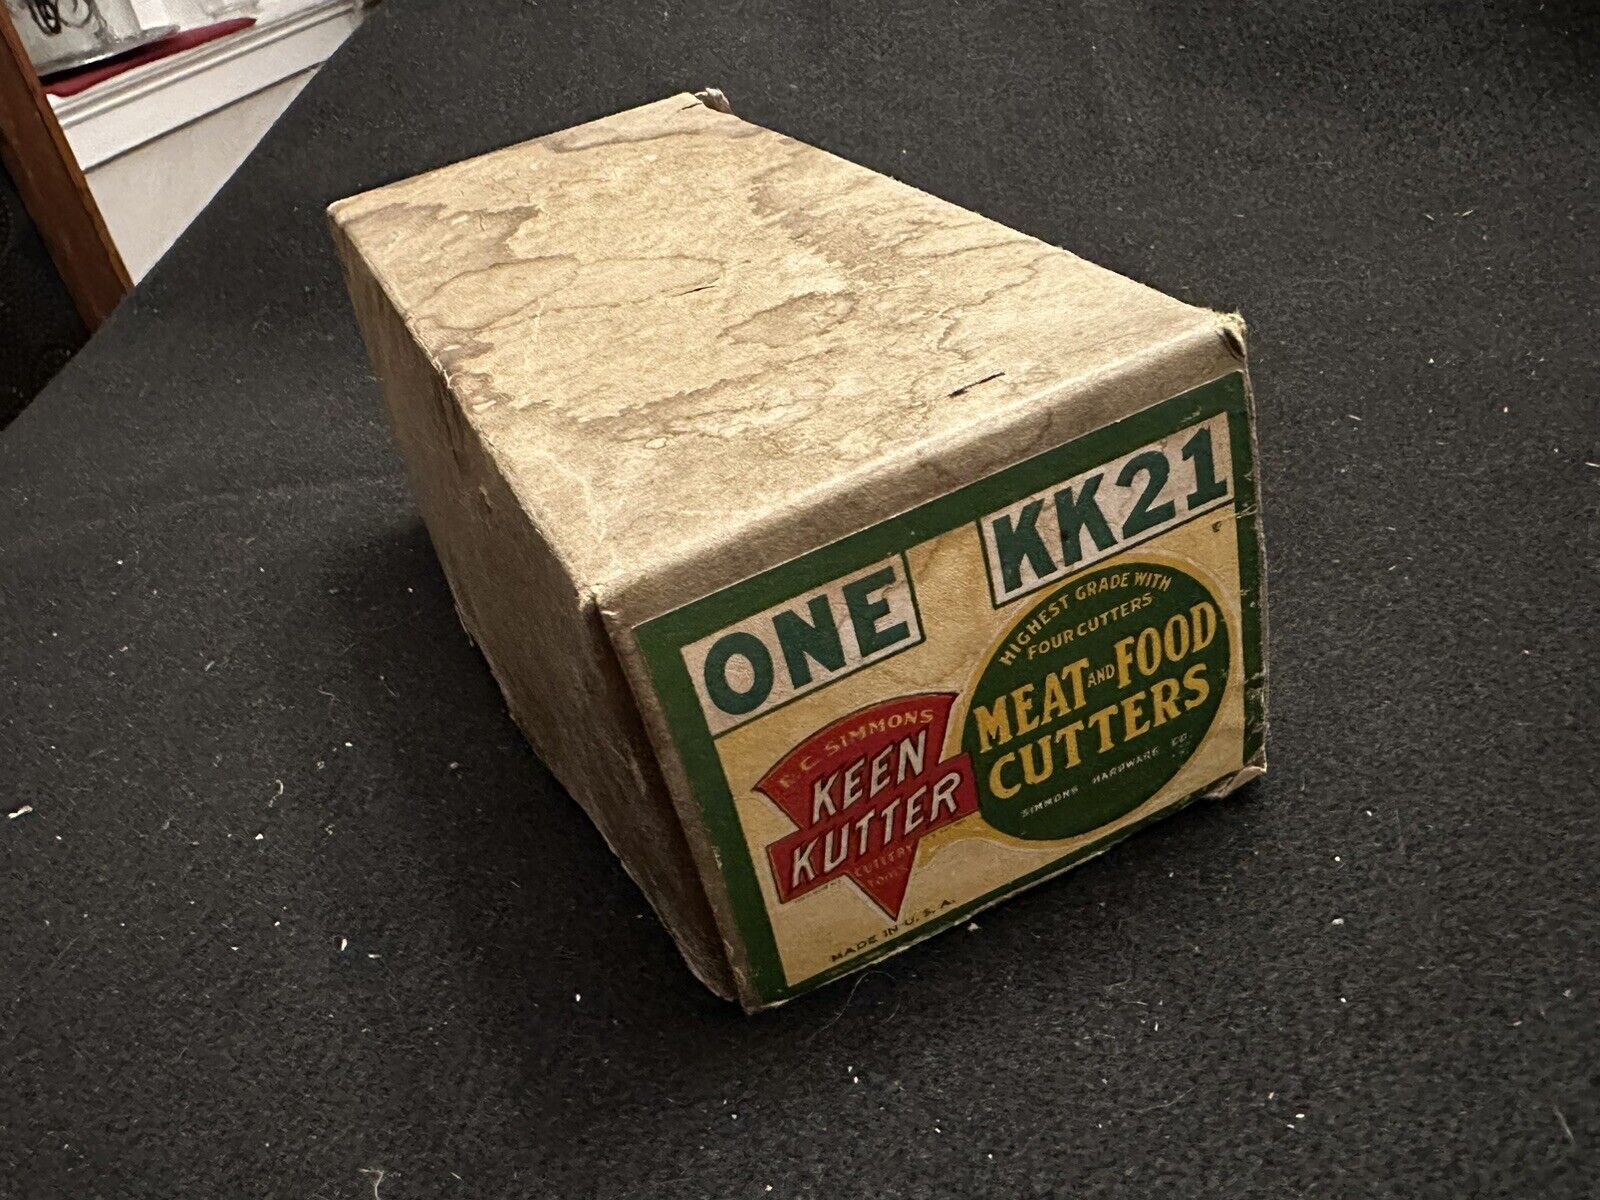 Antique Keen Kutter KK21 Meat and Food Grinder with Original Box